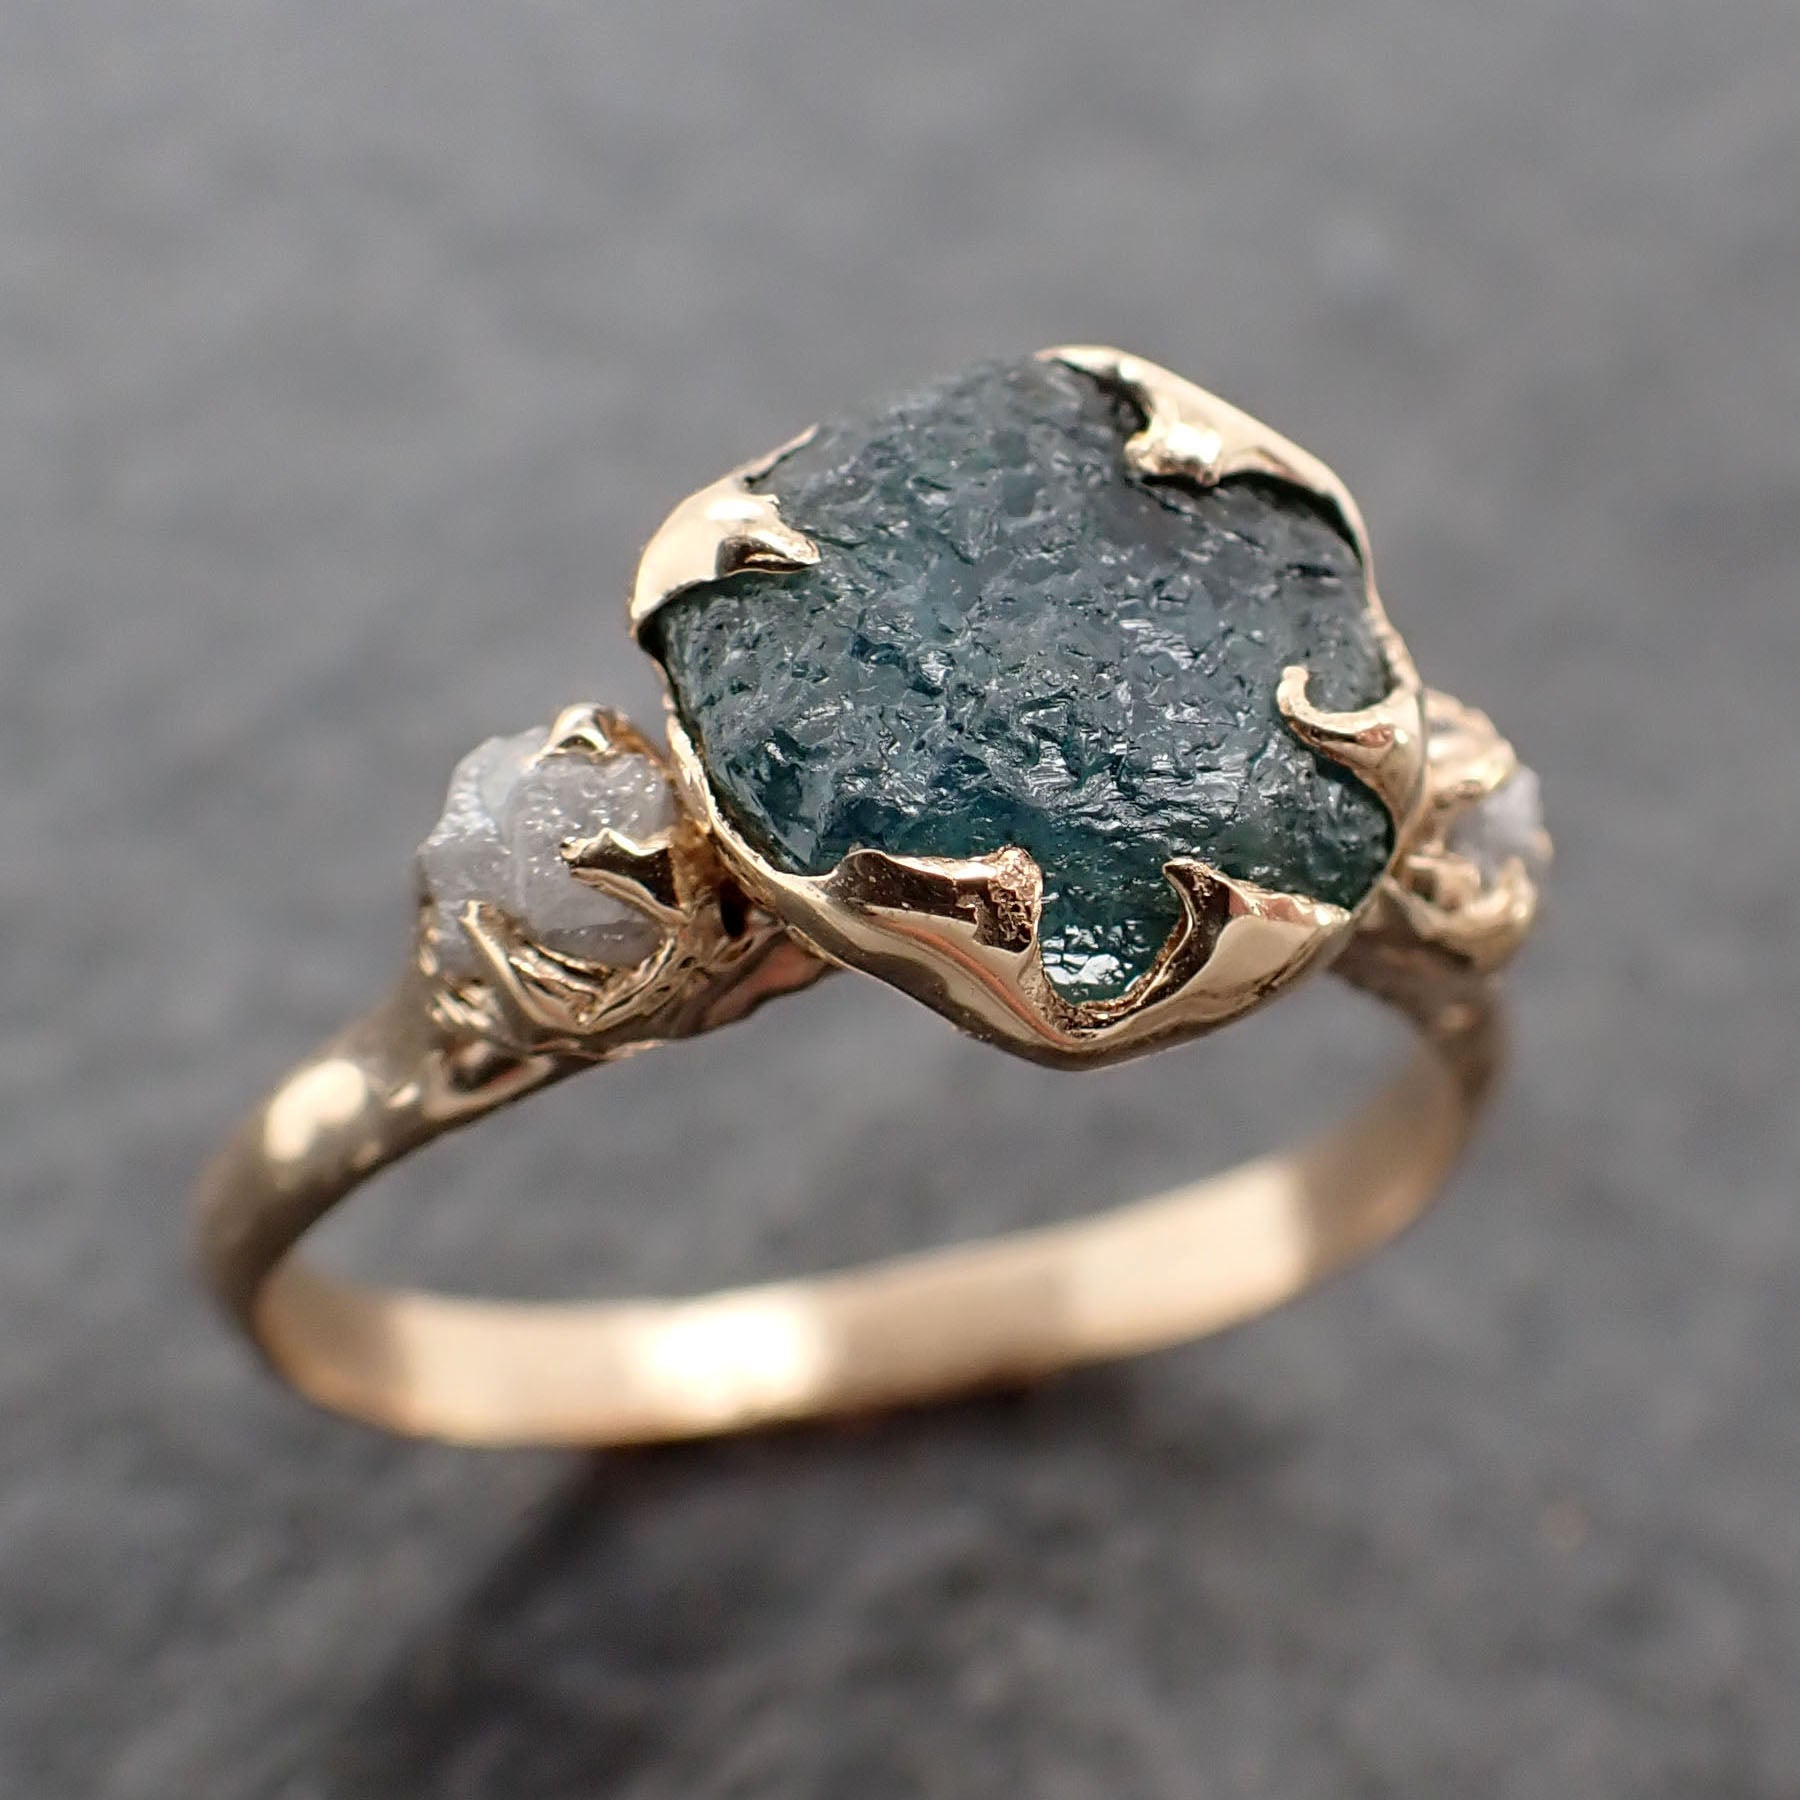 raw montana sapphire diamond 14k yellow gold engagement wedding ring custom one of a kind gemstone multi stone ring 2554 Alternative Engagement